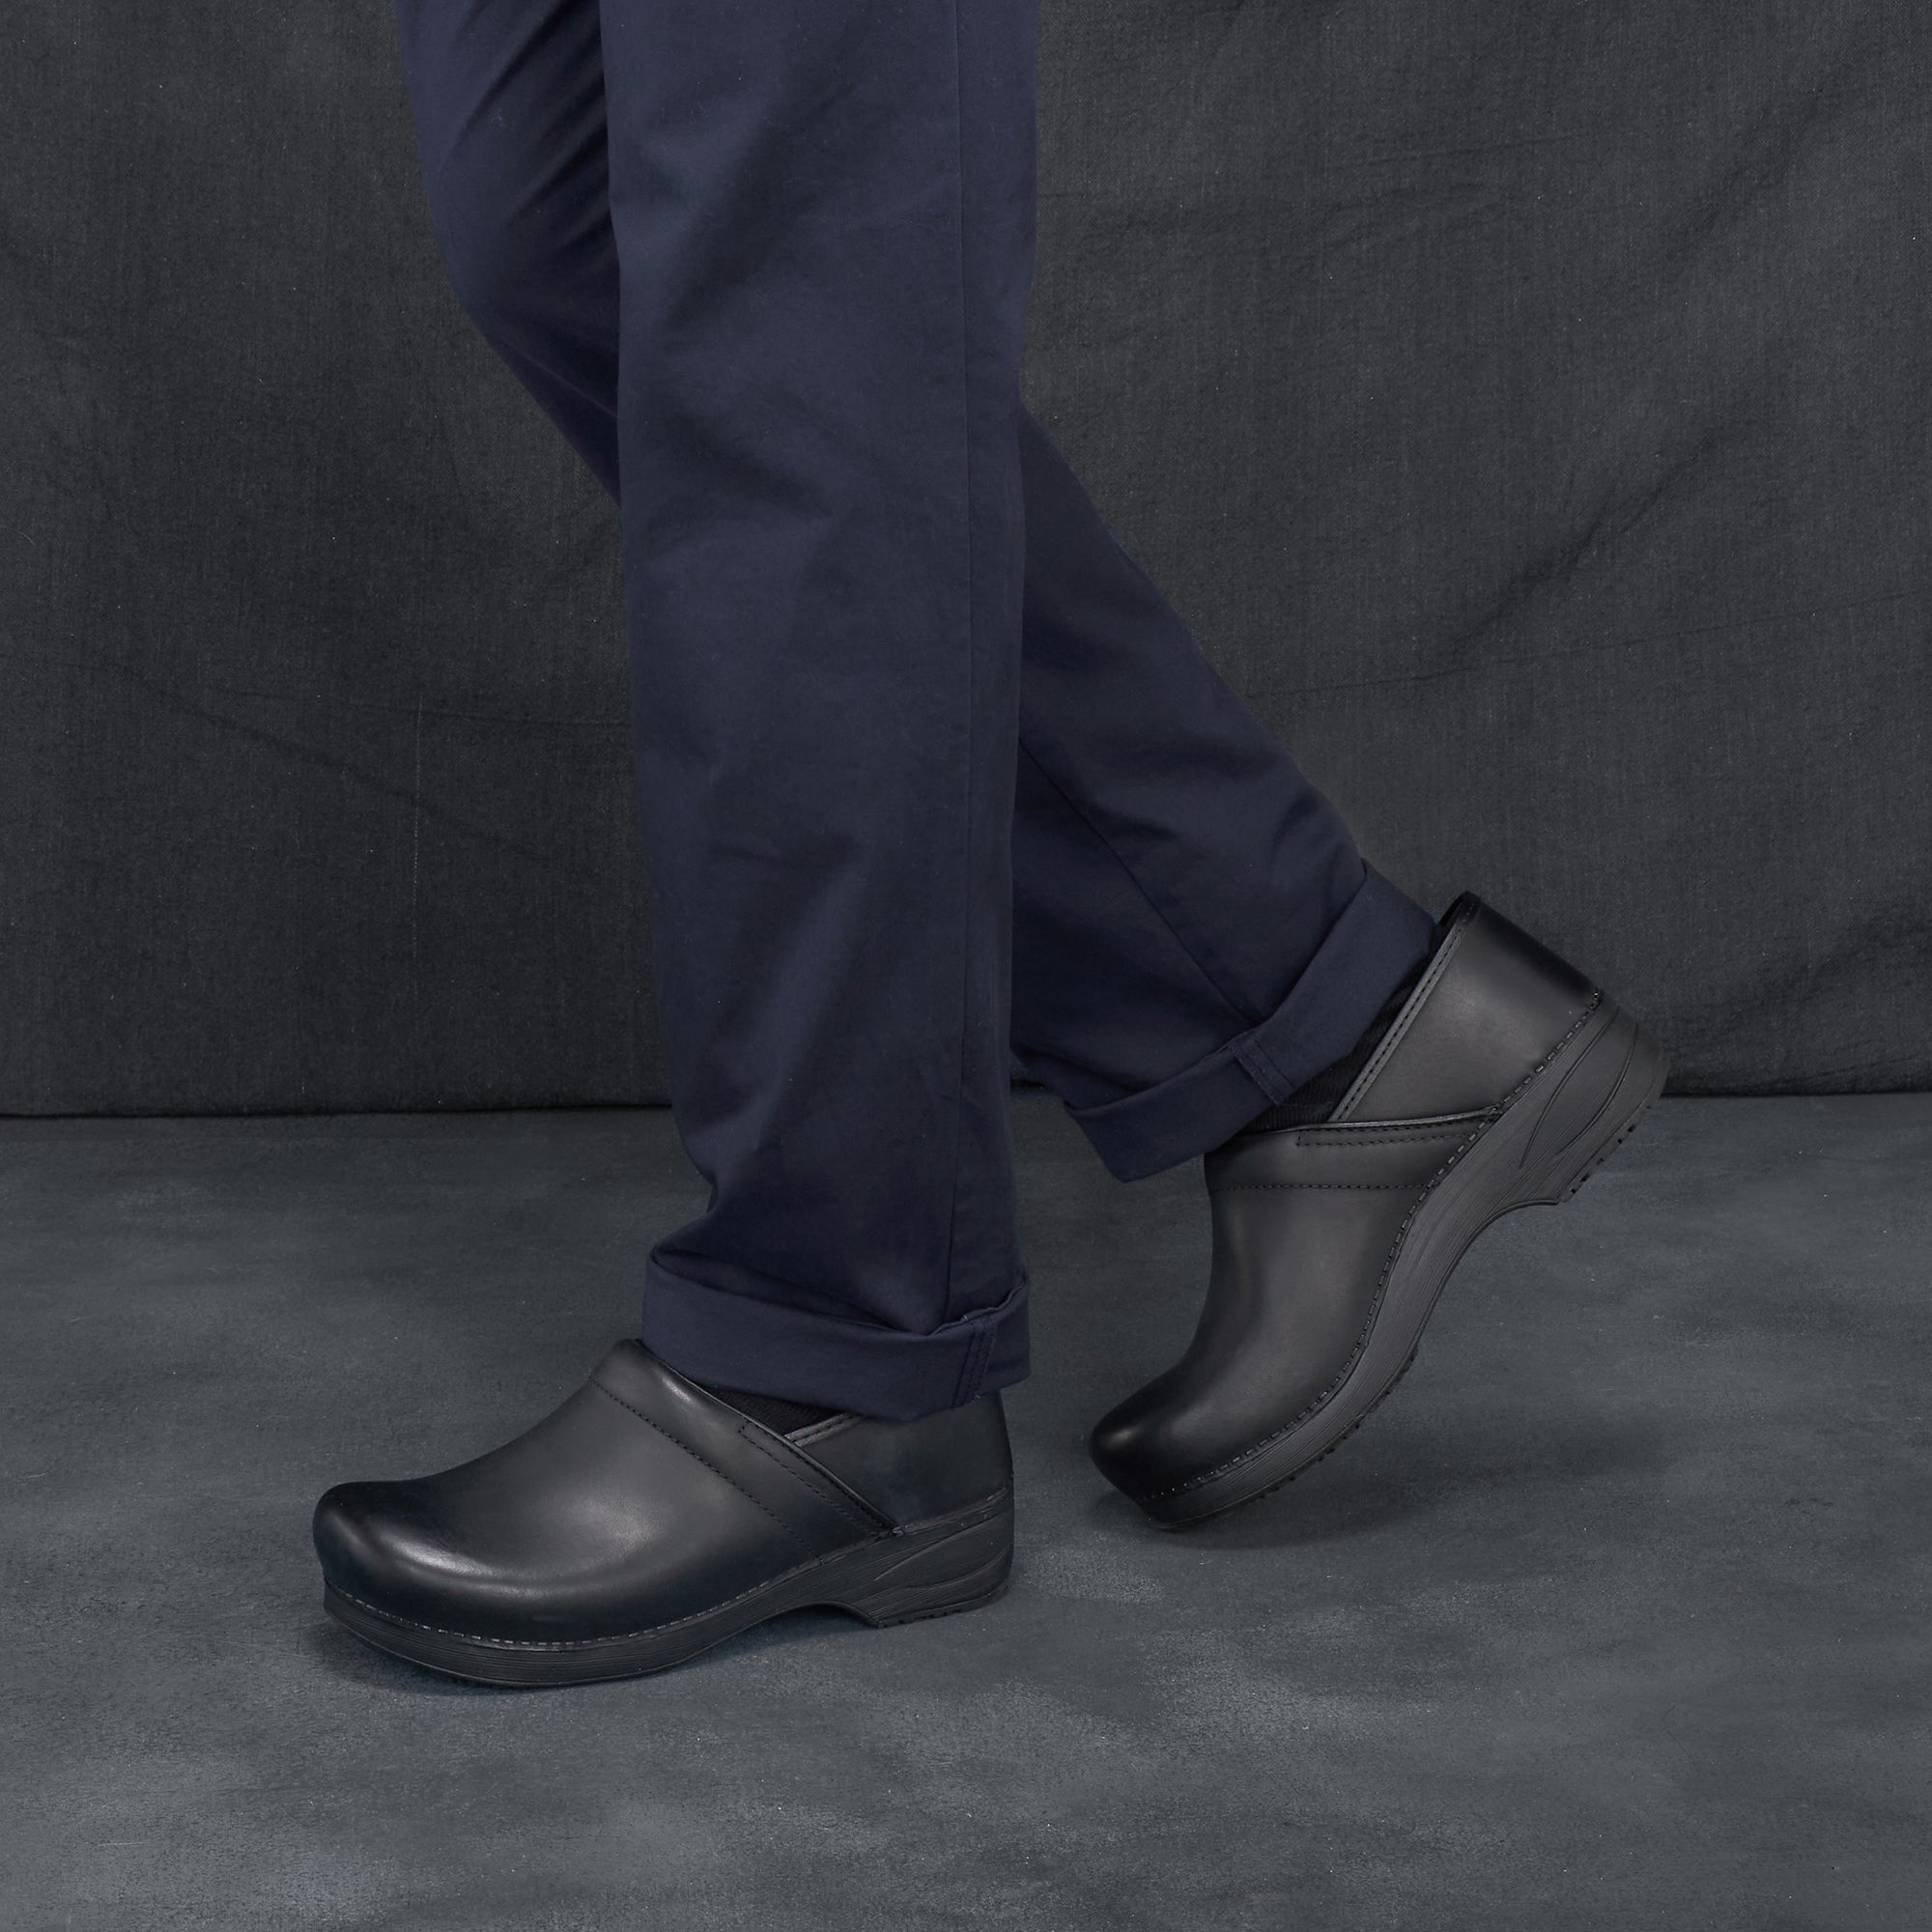 Black men's clogs worn in a casual setting.